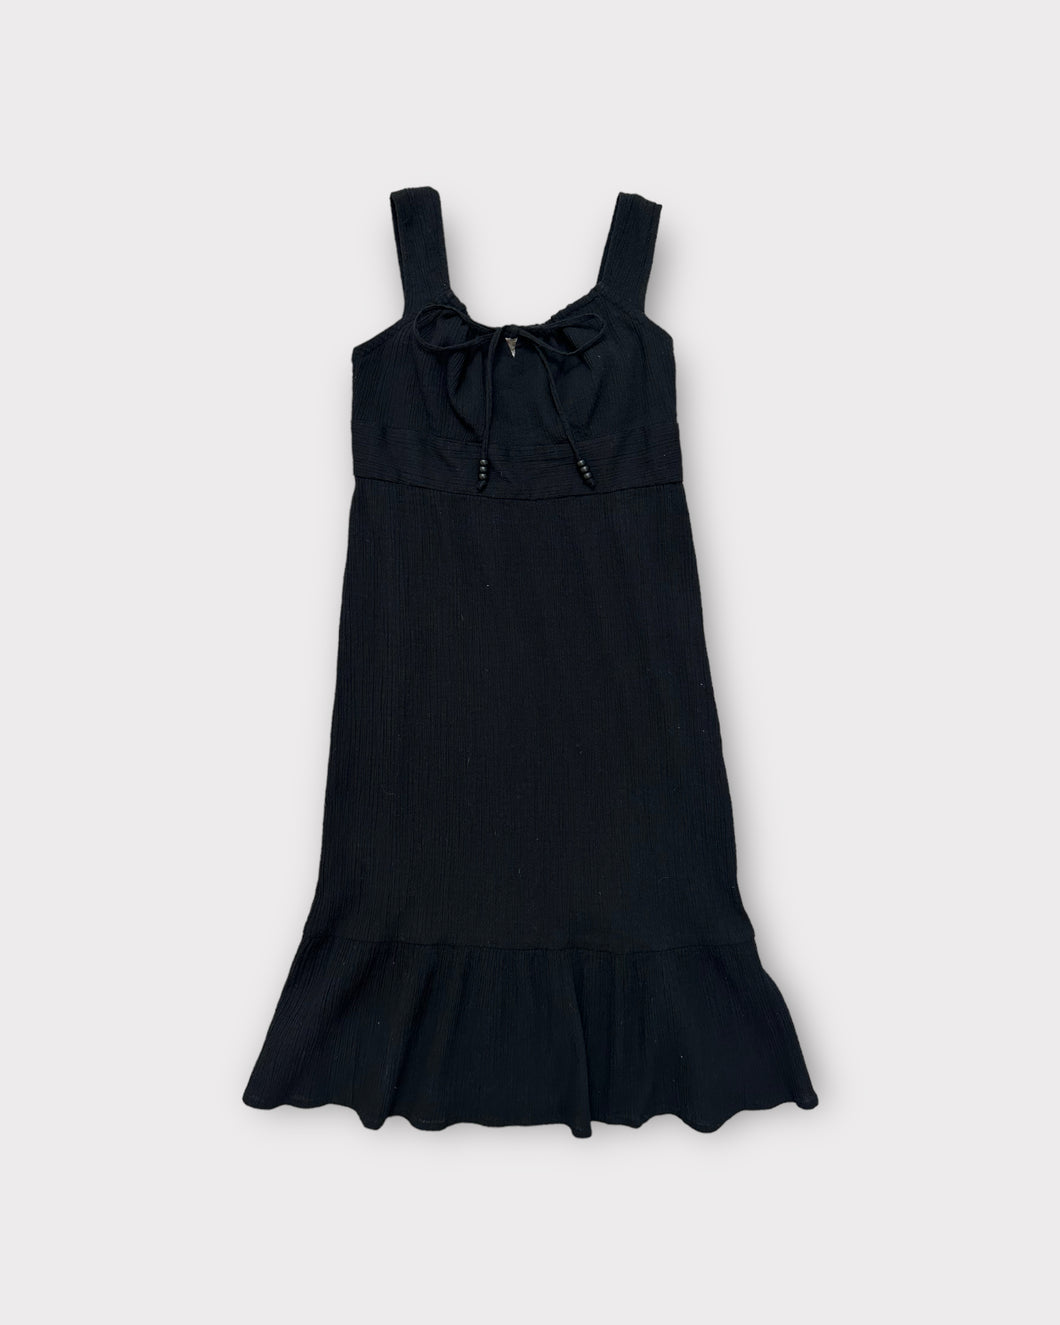 Ann Taylor Loft Black Babydoll Sun Dress with Beaded Tassels (XS)